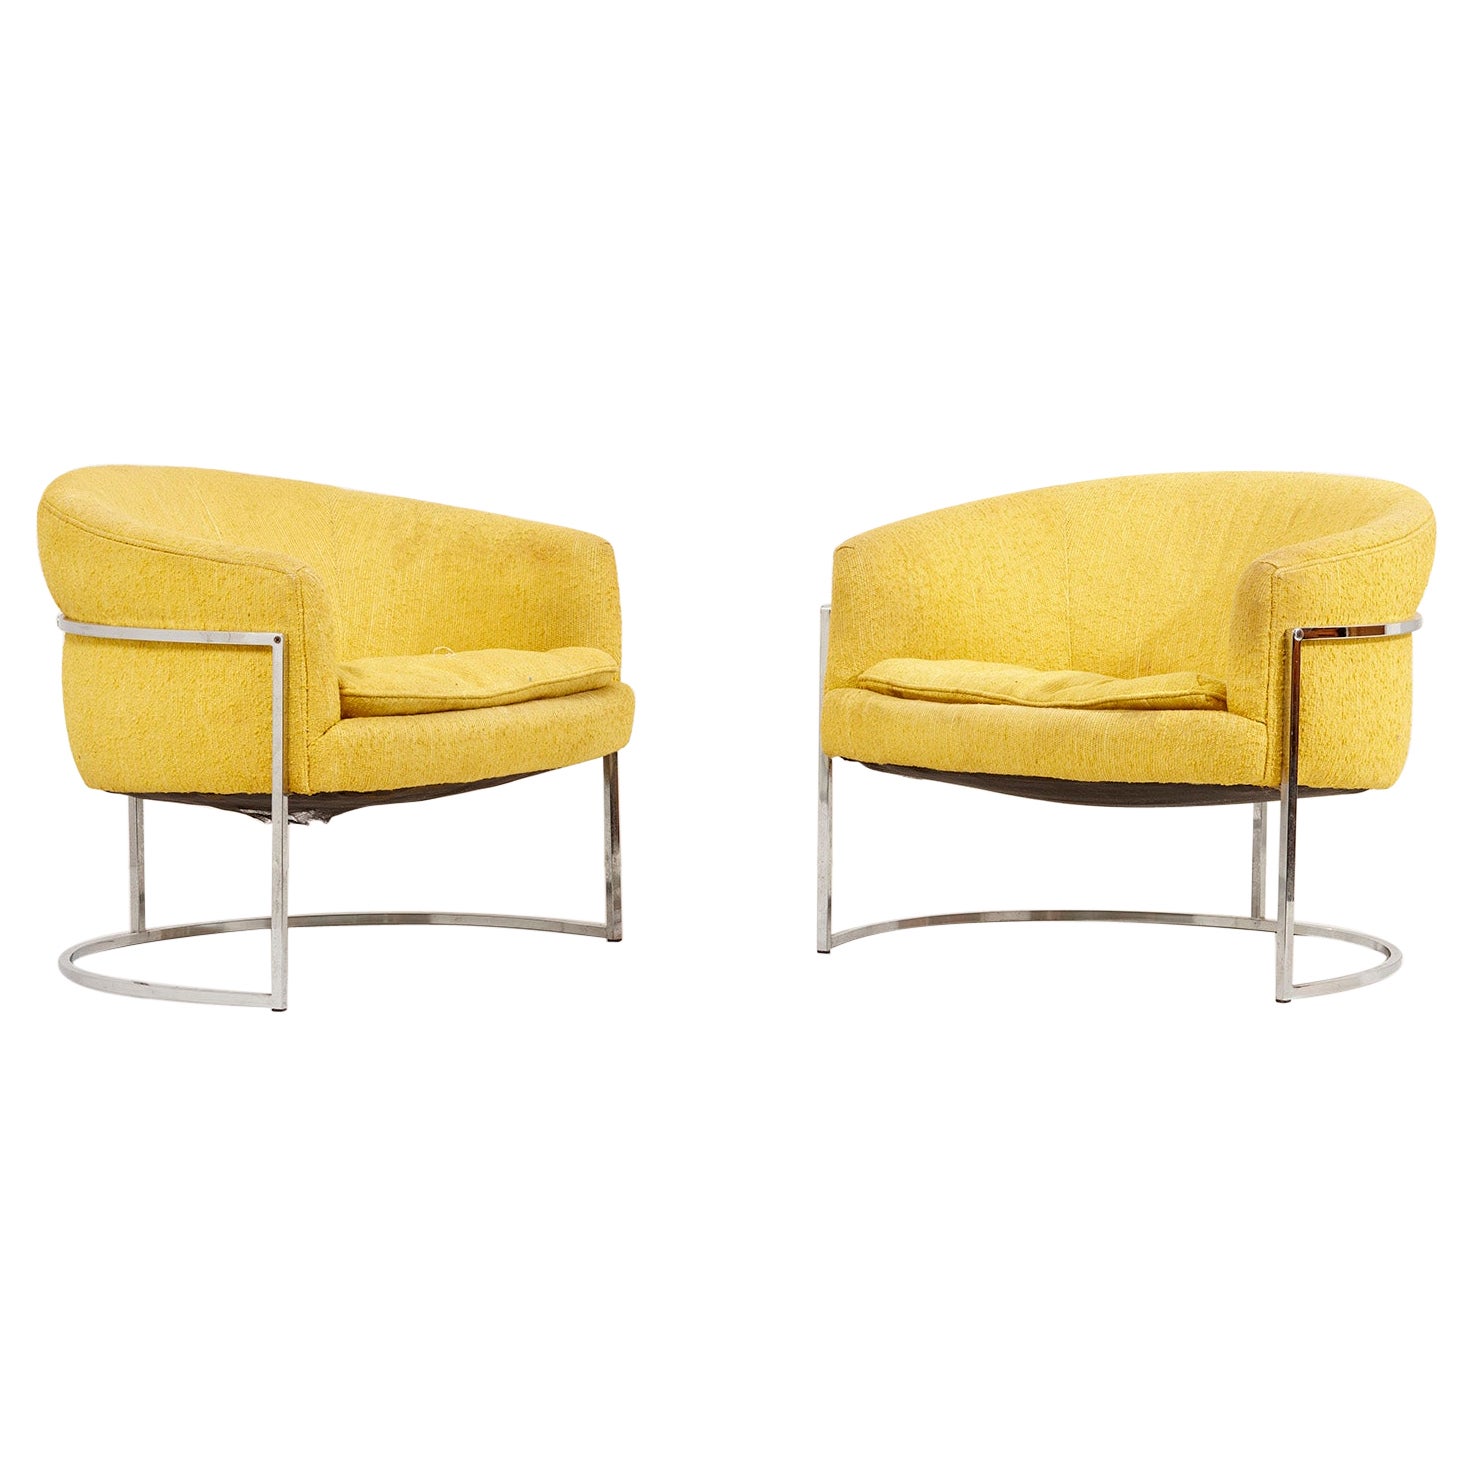 Pair of yellow Bernhadt Lounge Chairs, USA, 1960s